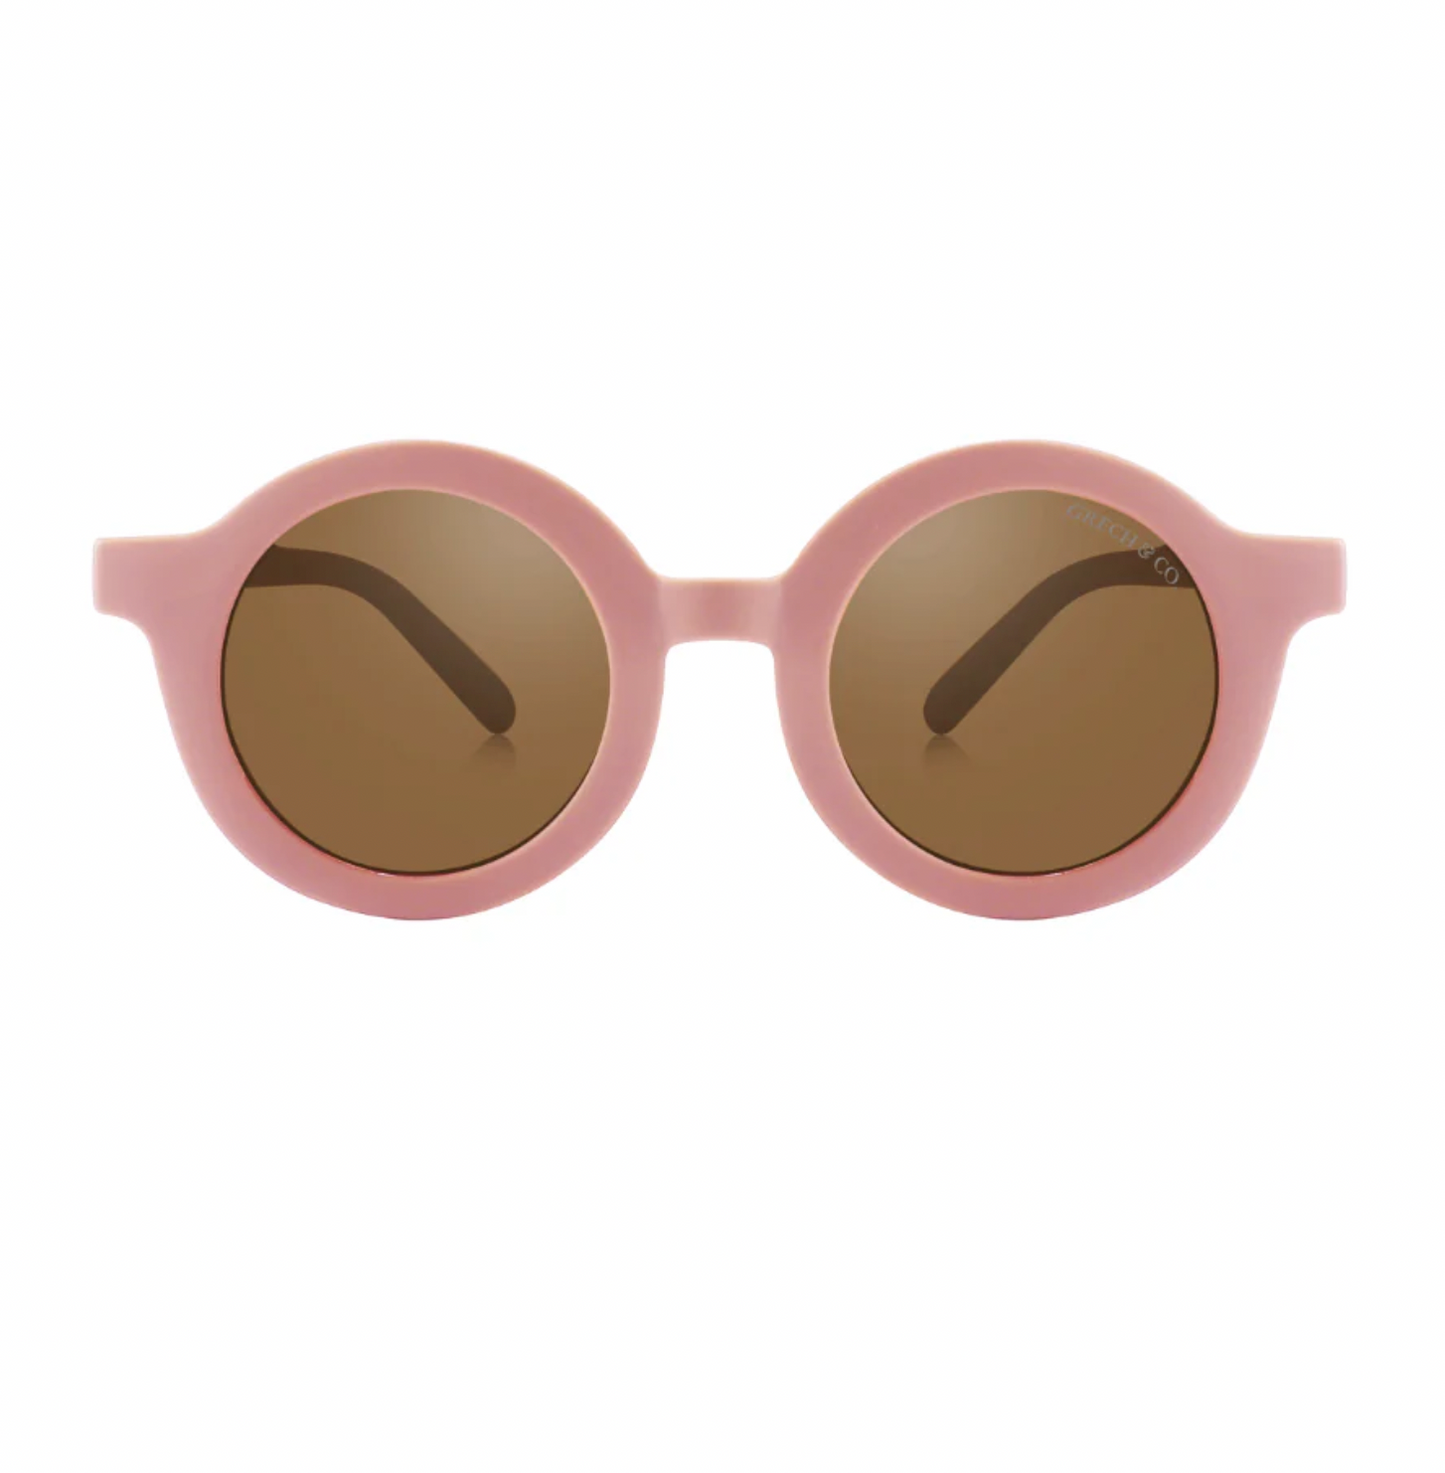 Grech & Co Original Round Sunglasses Blush Bloom